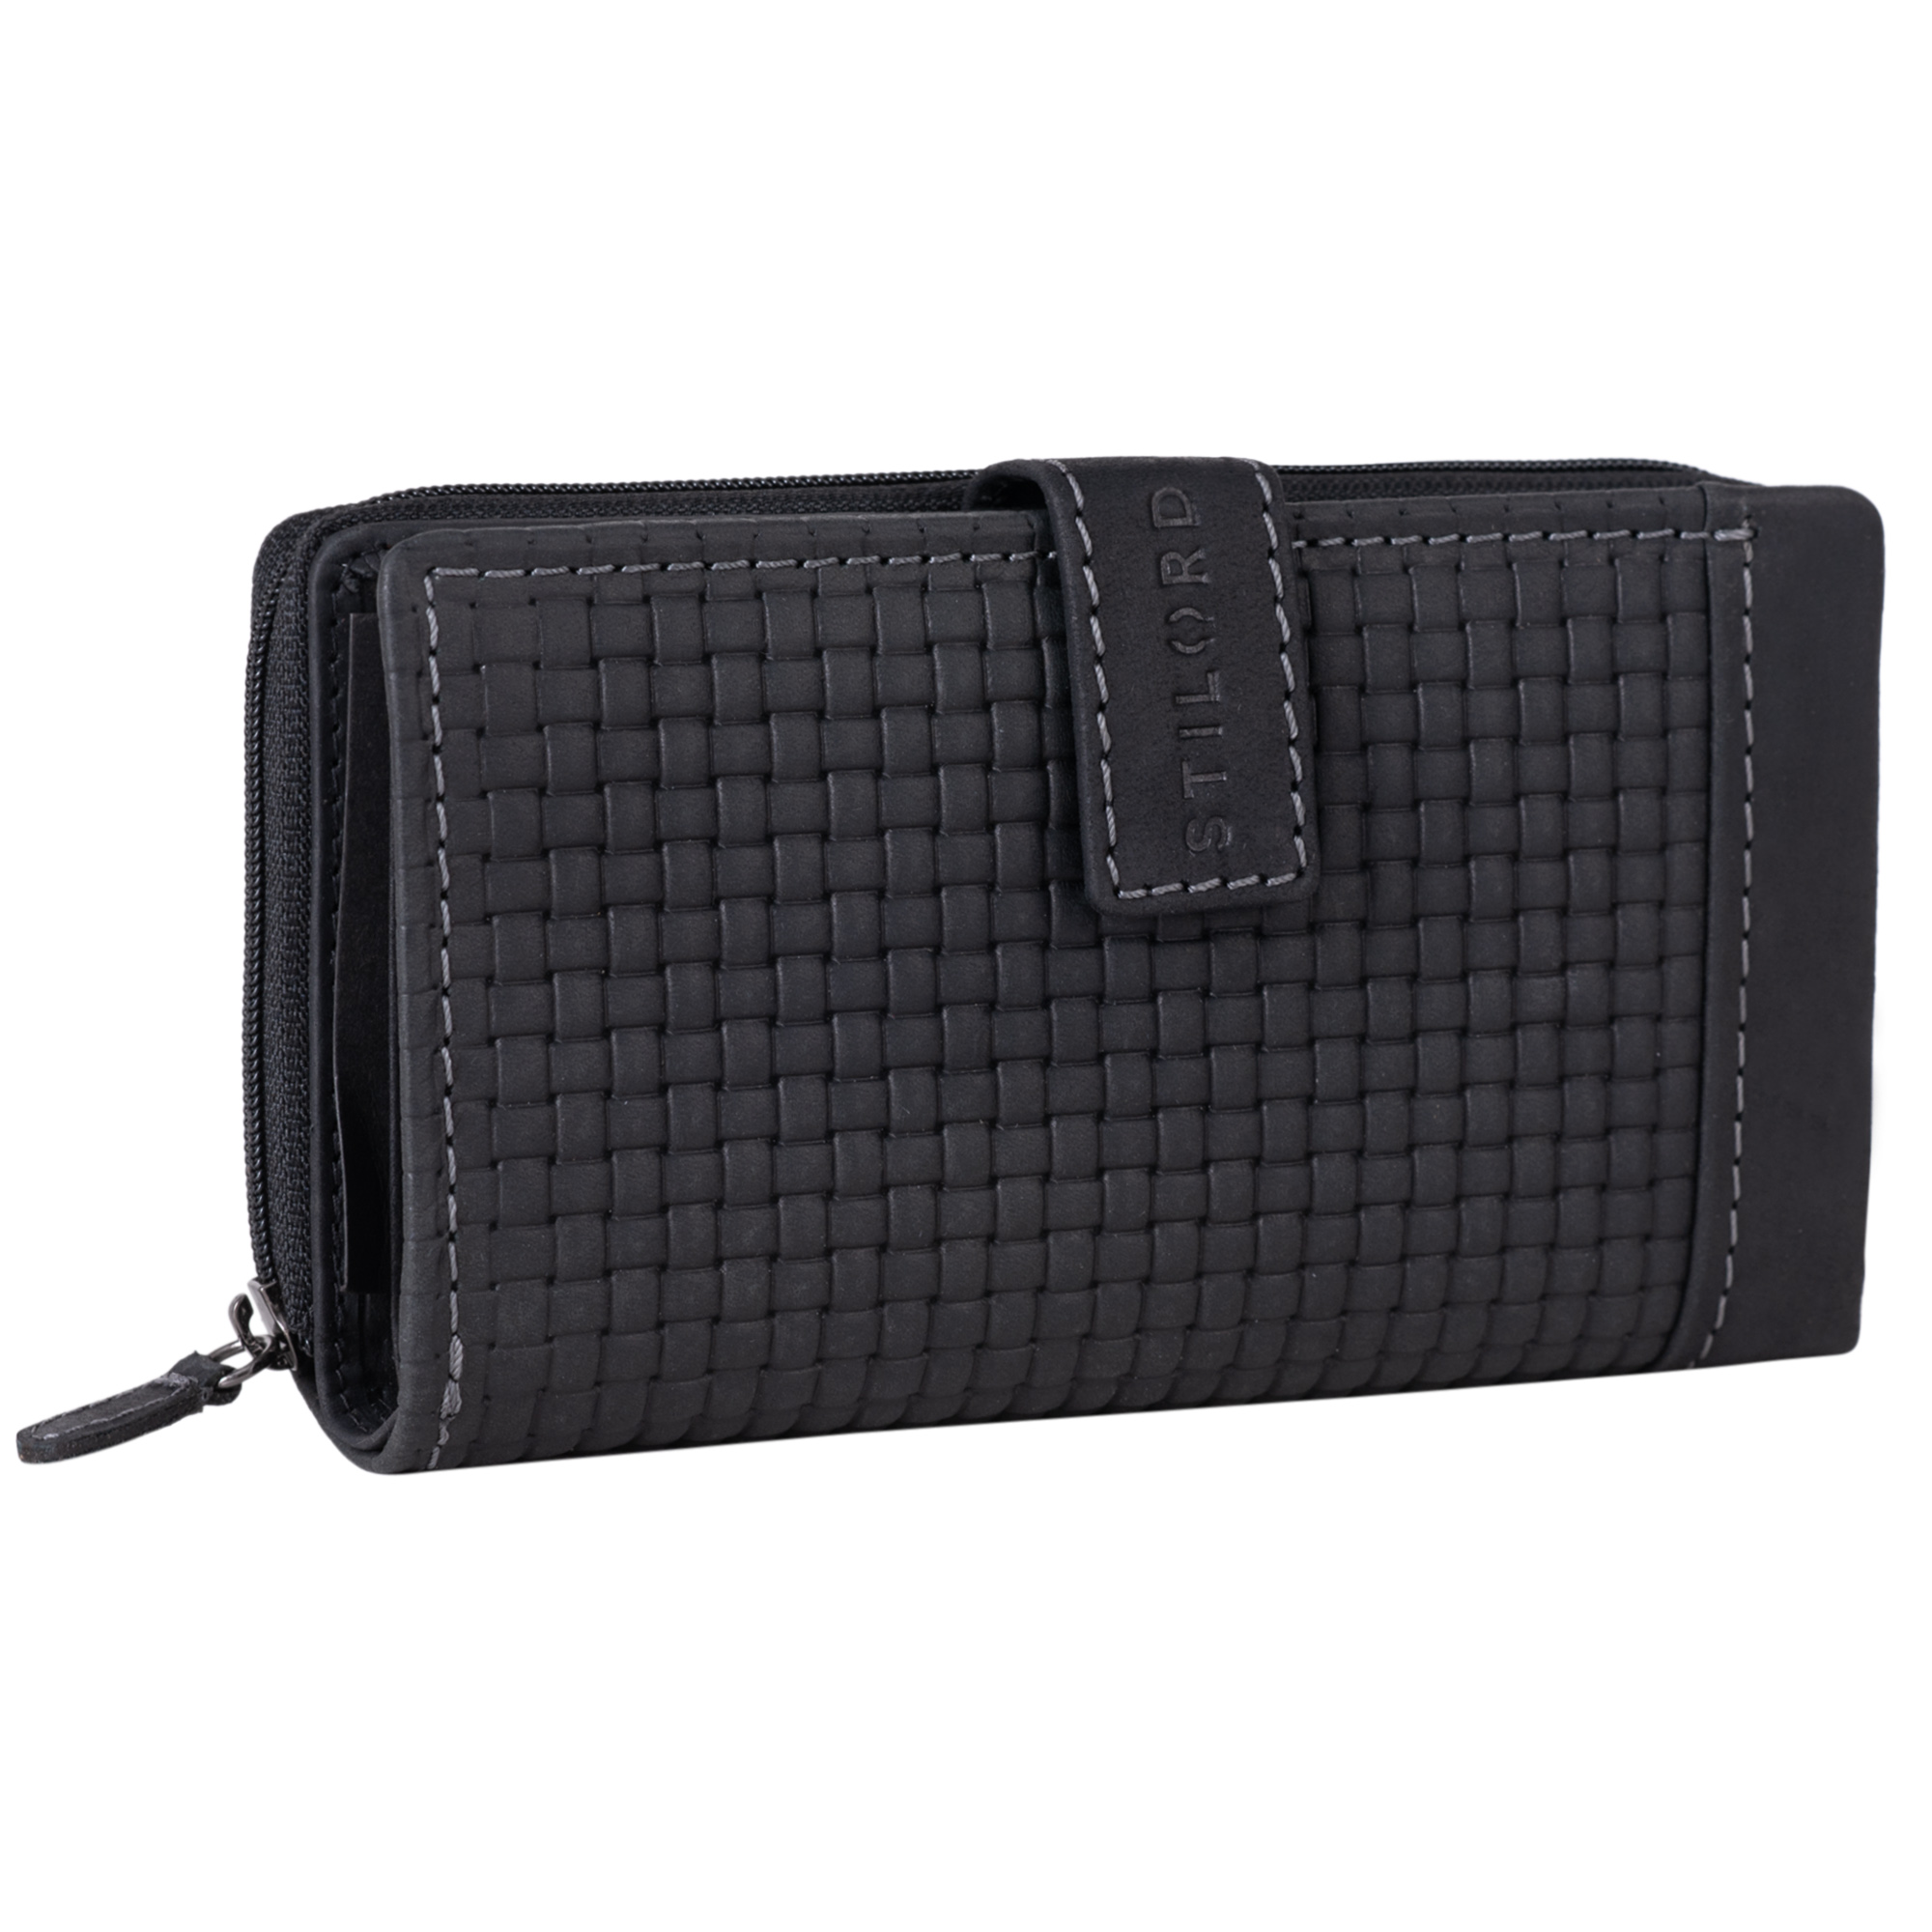 Coin purse ladies short small wallet soft leather driver's license handbag  - Walmart.com